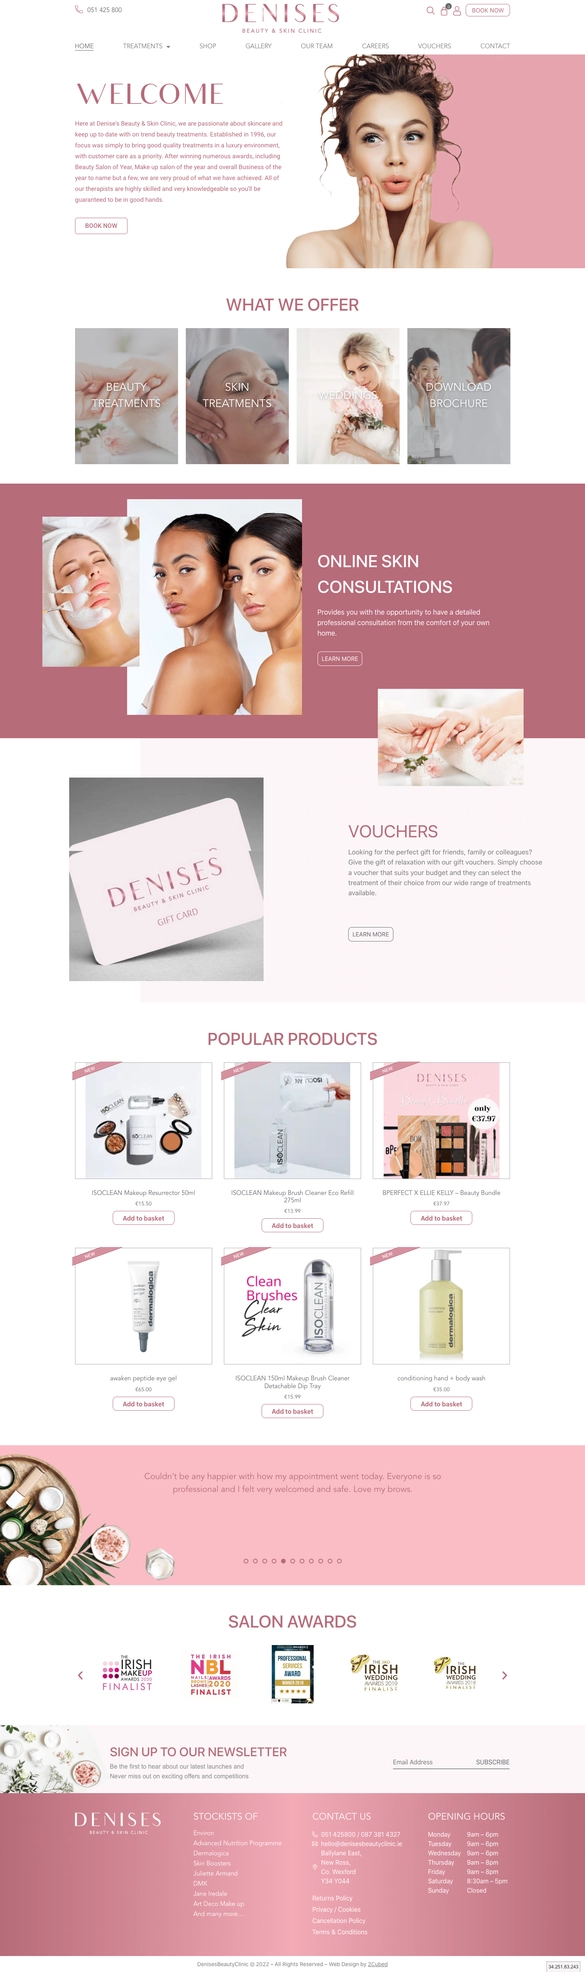 Denise’s Beauty Clinic logo